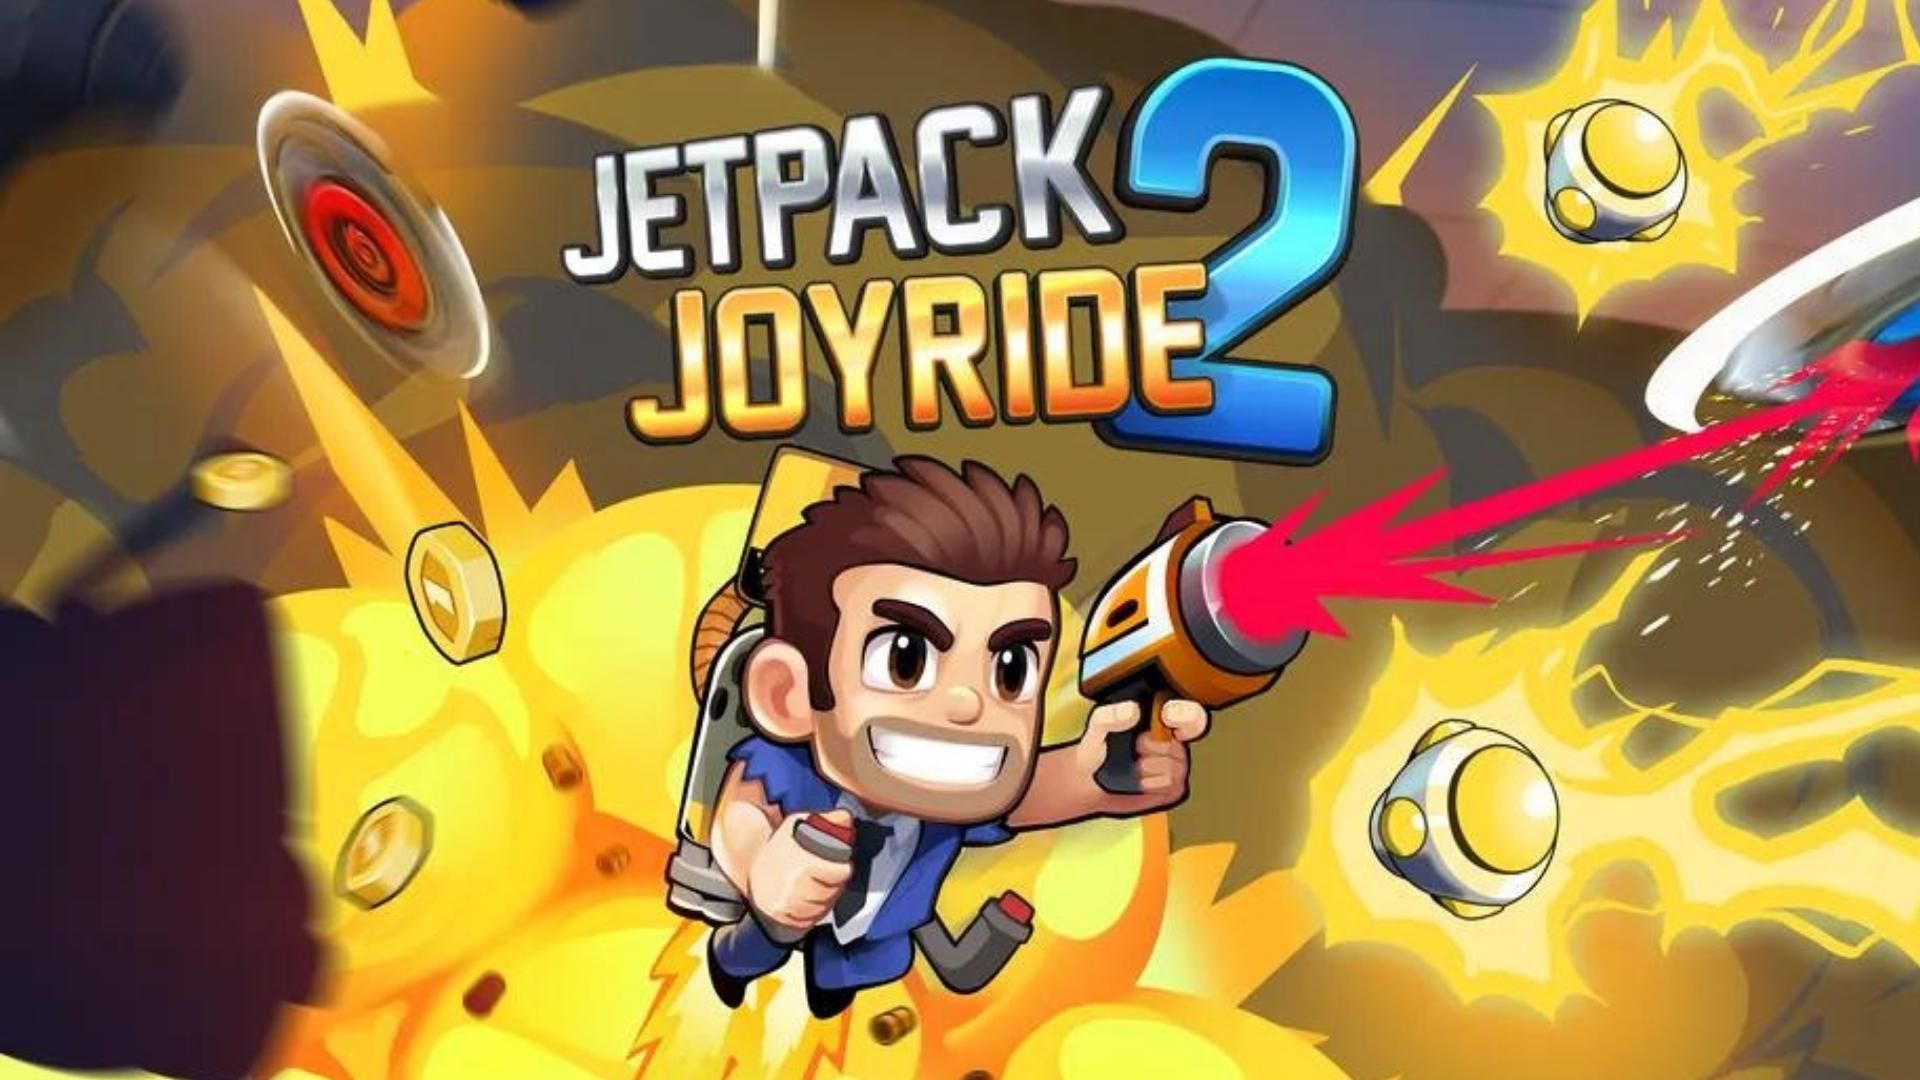 jetpack joyride 2 release date